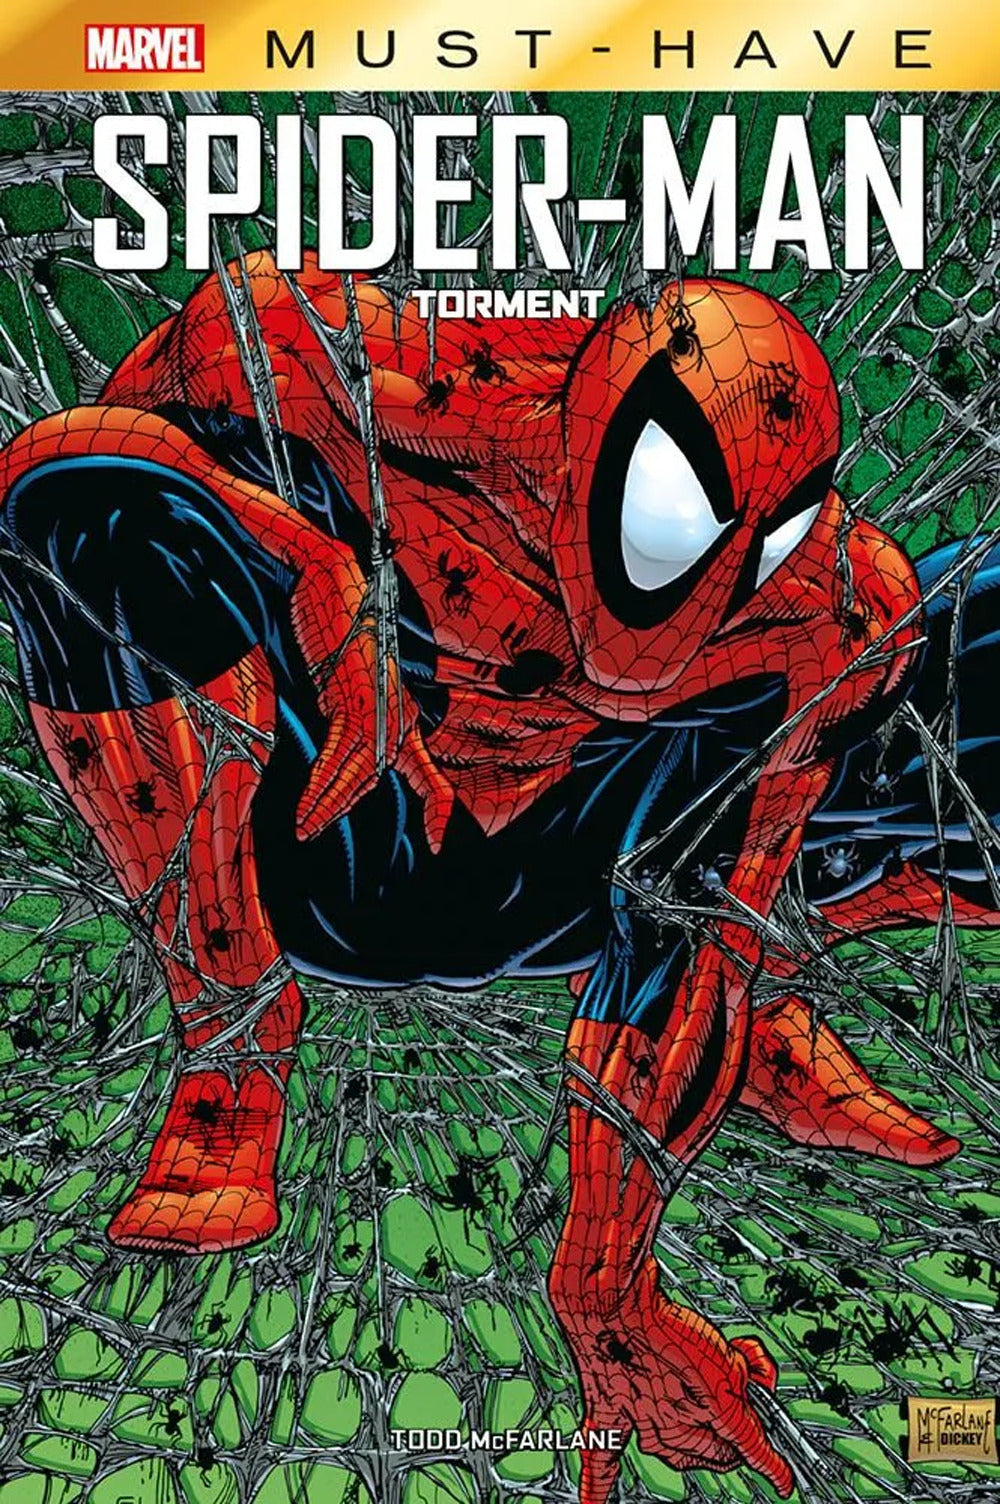 Torment. Spider-Man